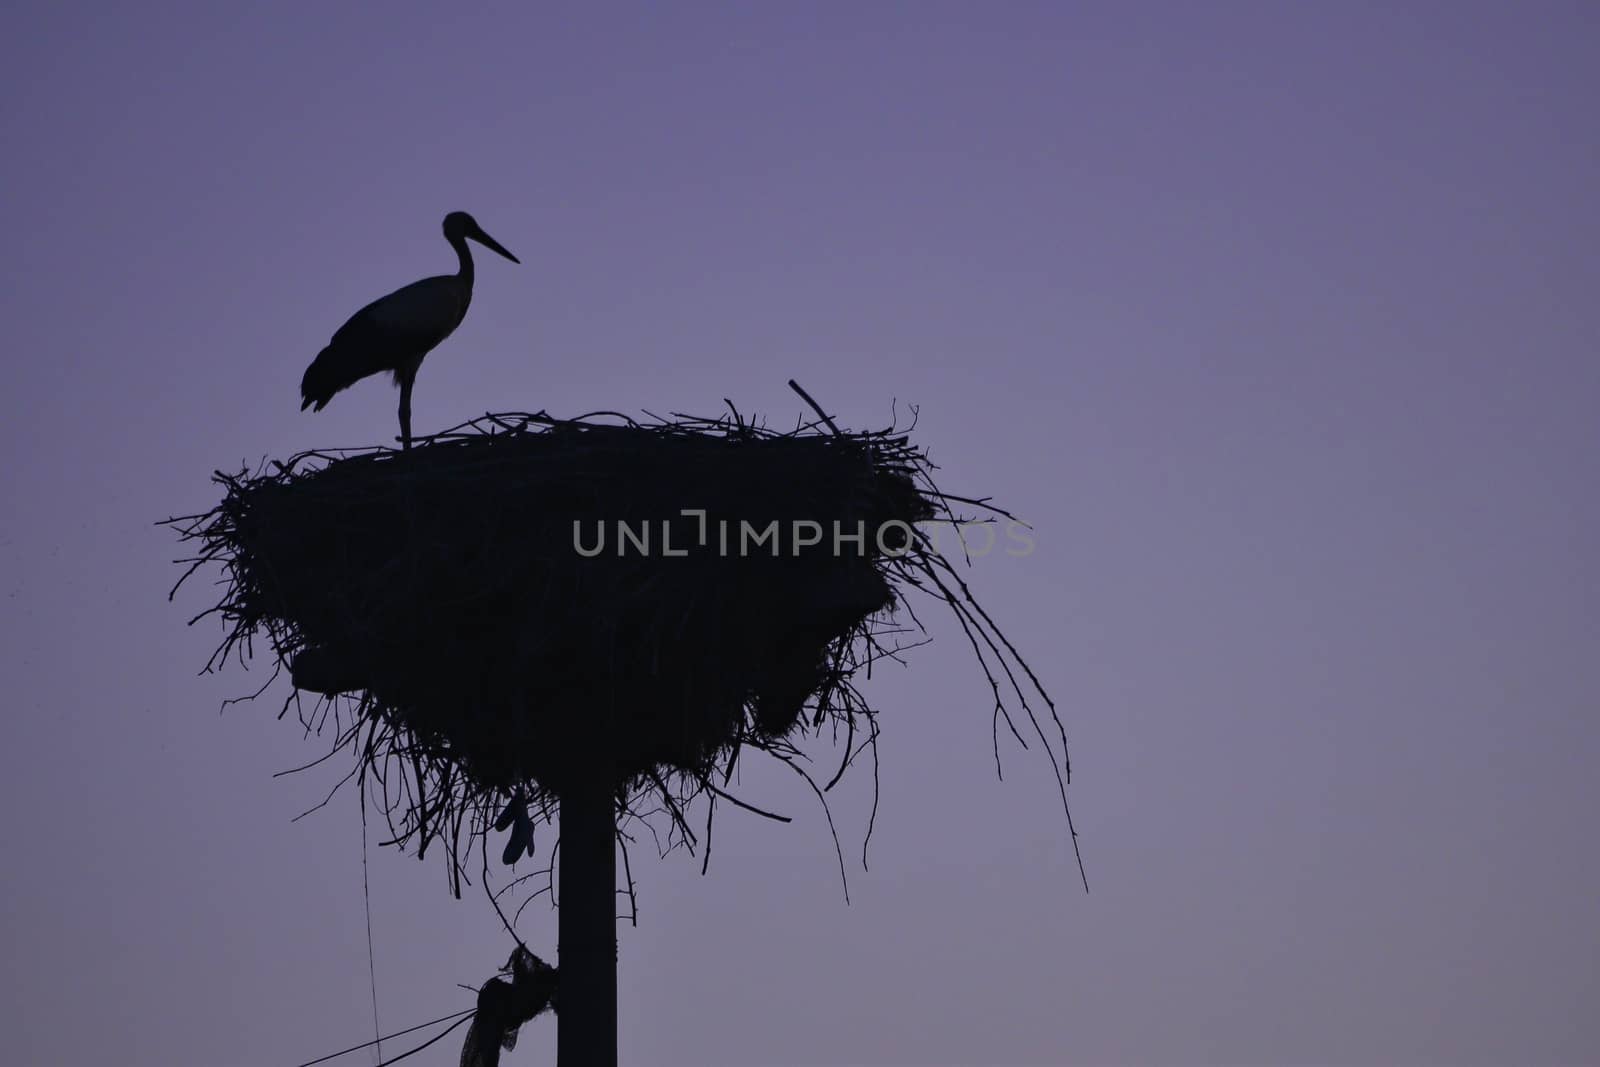 Stork nests and habitat